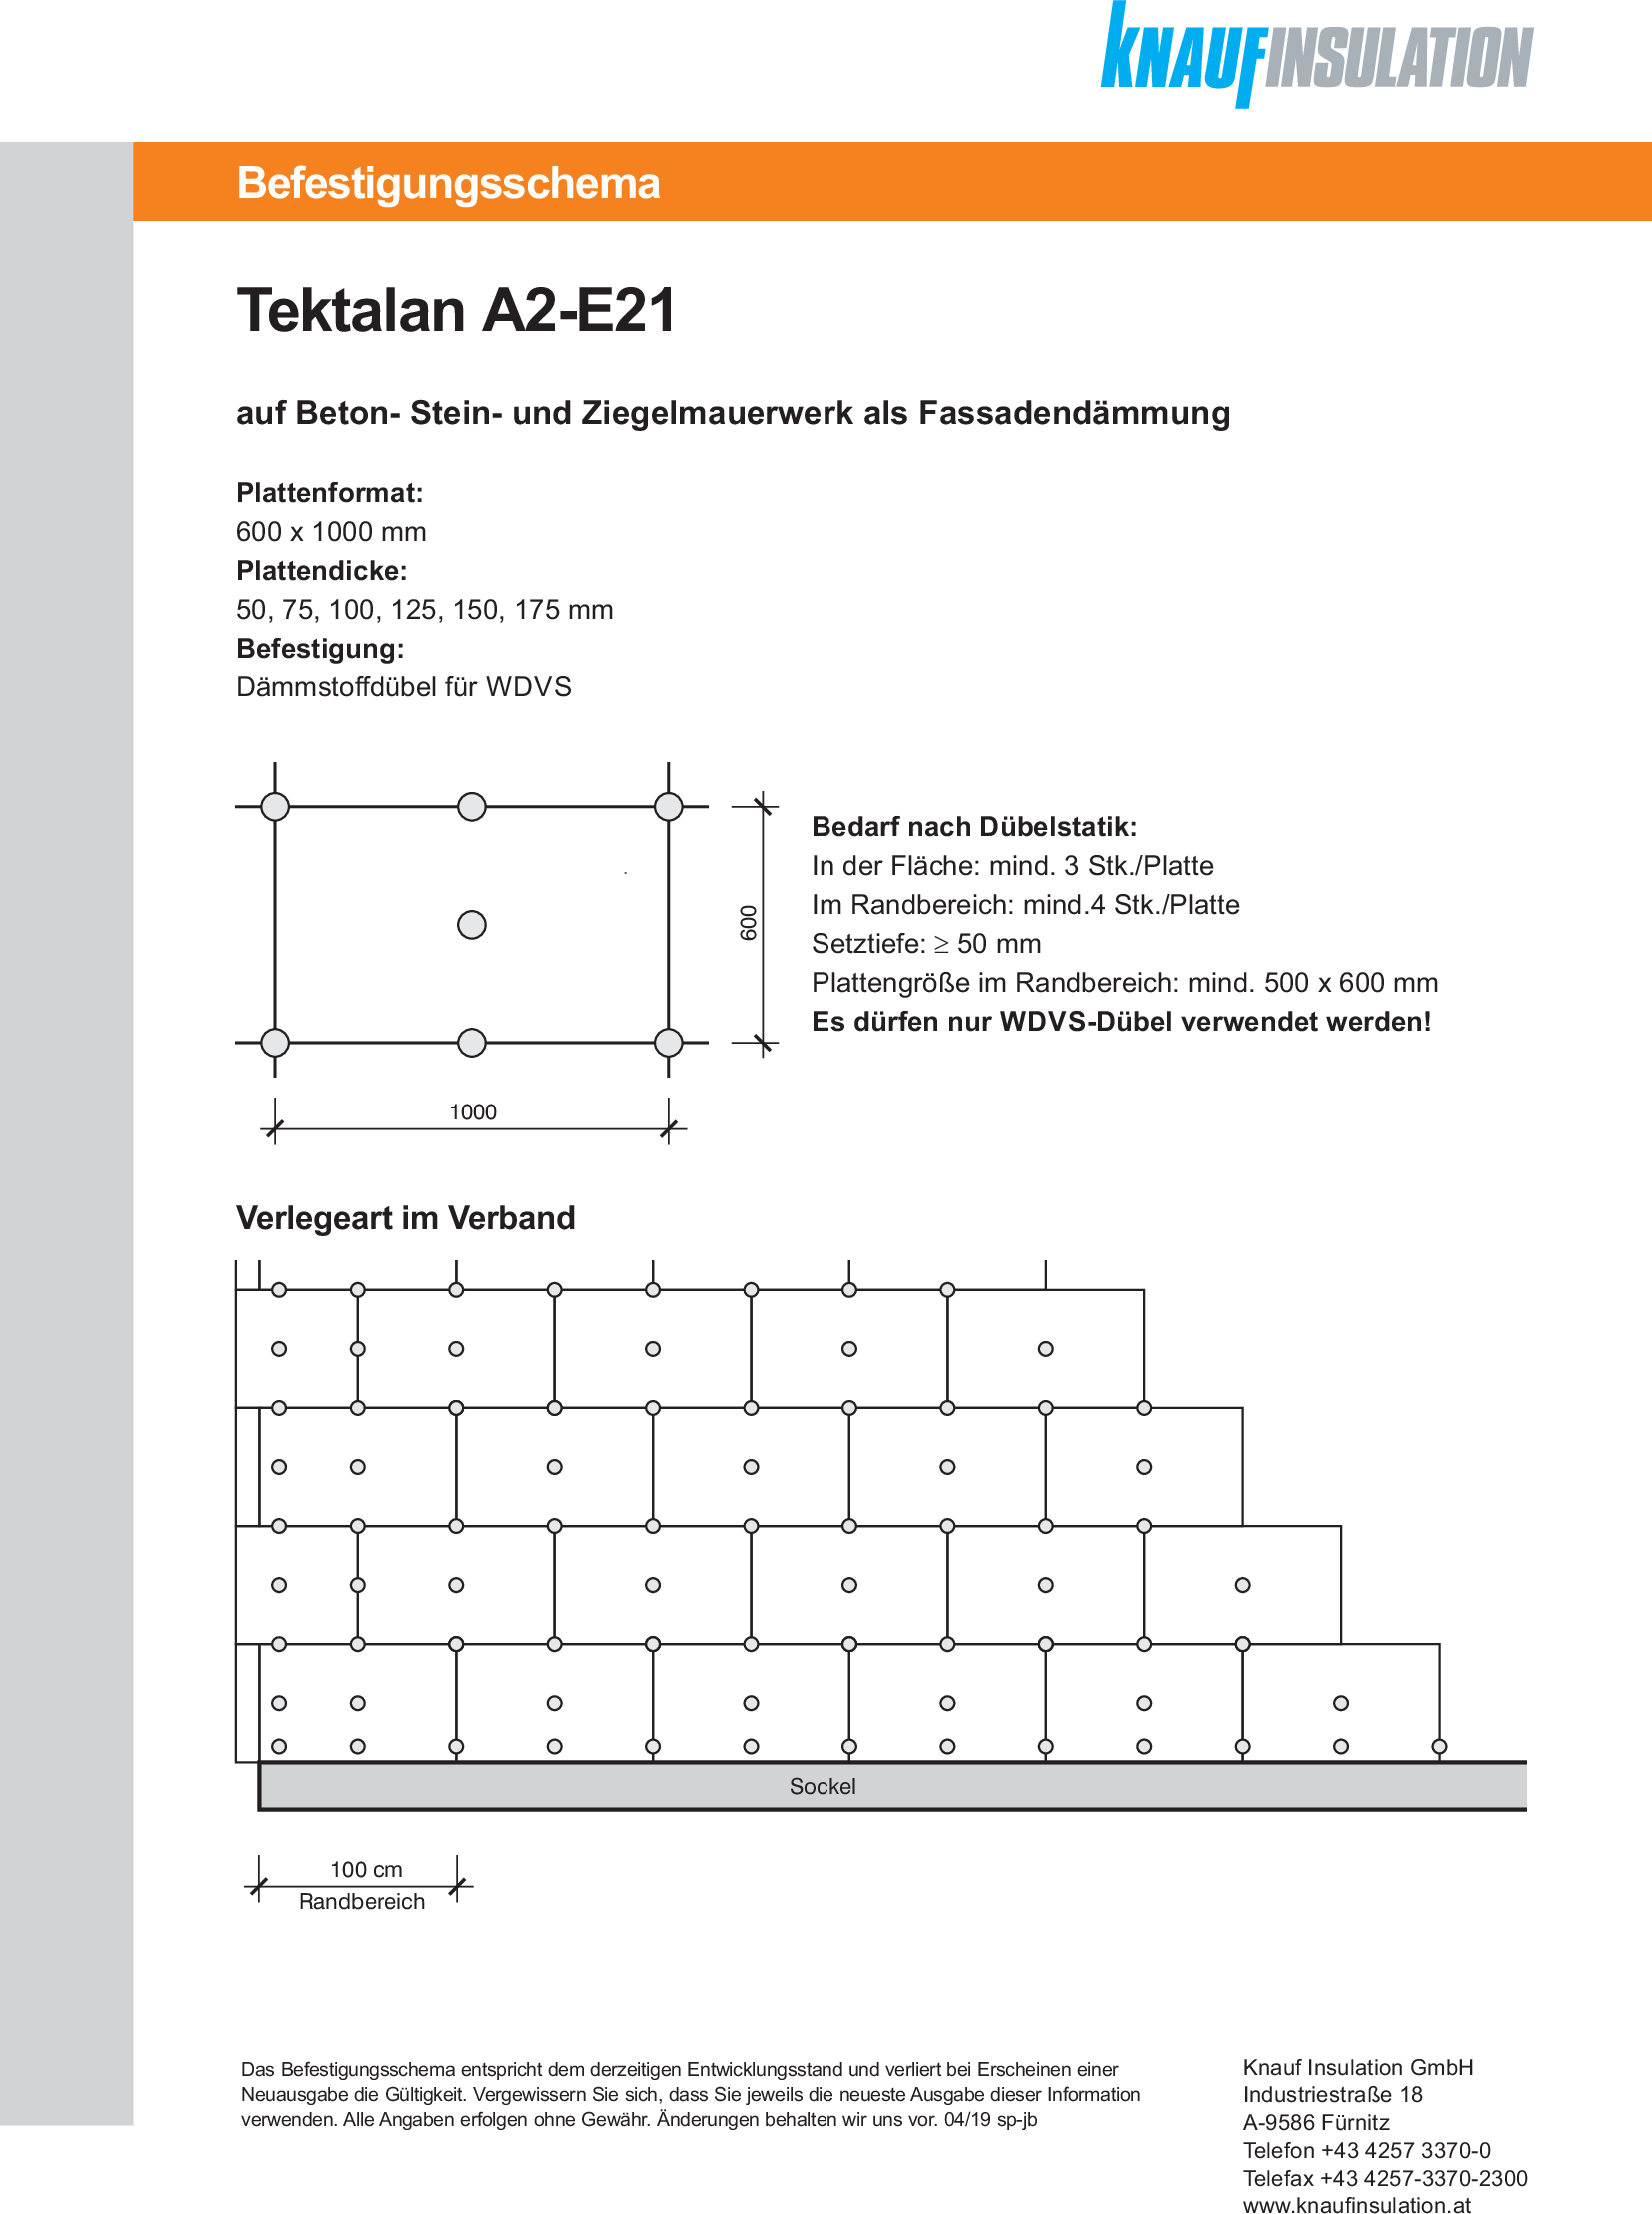 Tektalan A2-E21, Befestigungsschema